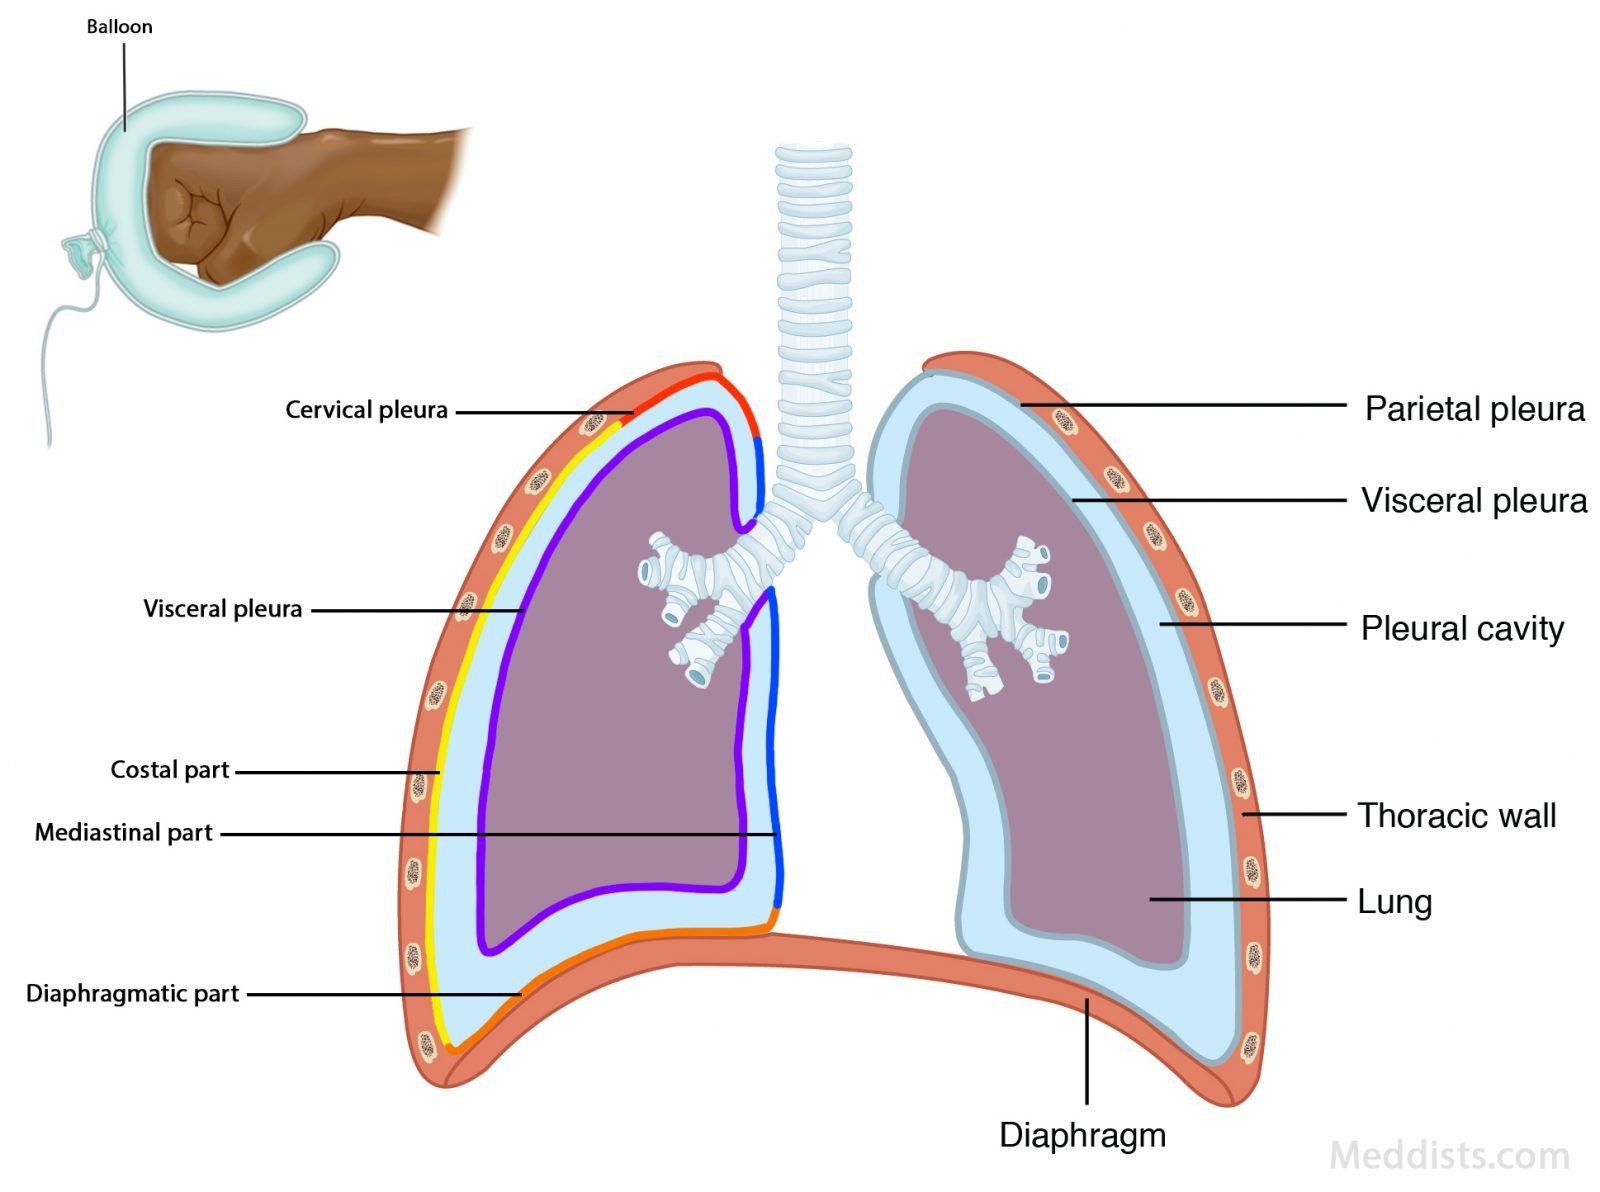 Pleurae Pleural Cavity Pericardial Membrane Root Of Lung At Hilum ...